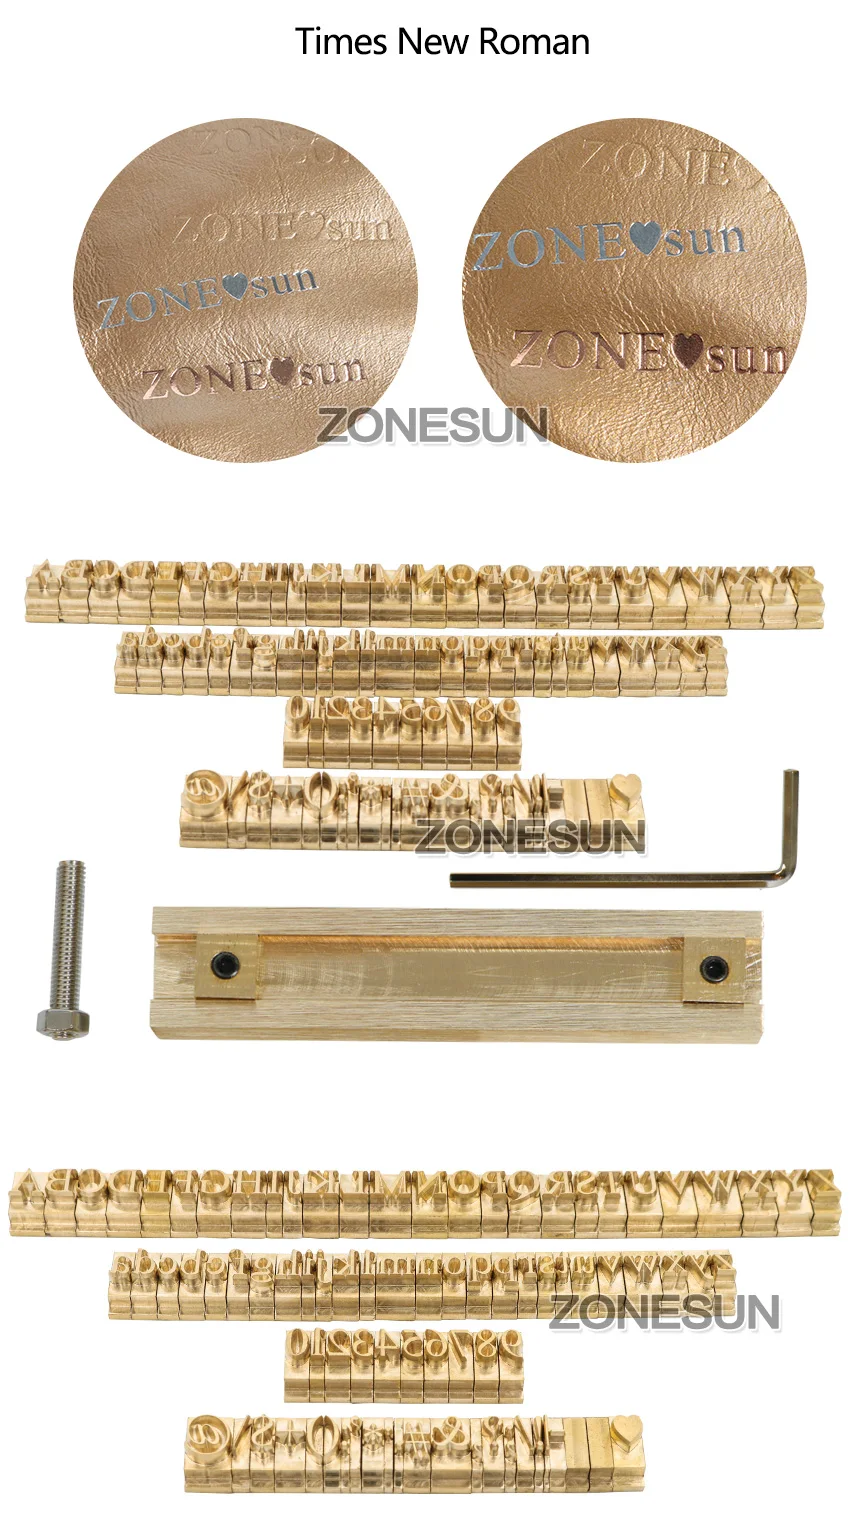 ZONESUN 6 мм т слот 10 см приспособление+ 52 буквы алфавита+ 10 цифр+ 20 символ на заказ кожа штамп тяга инструмент брендинг Железный станок